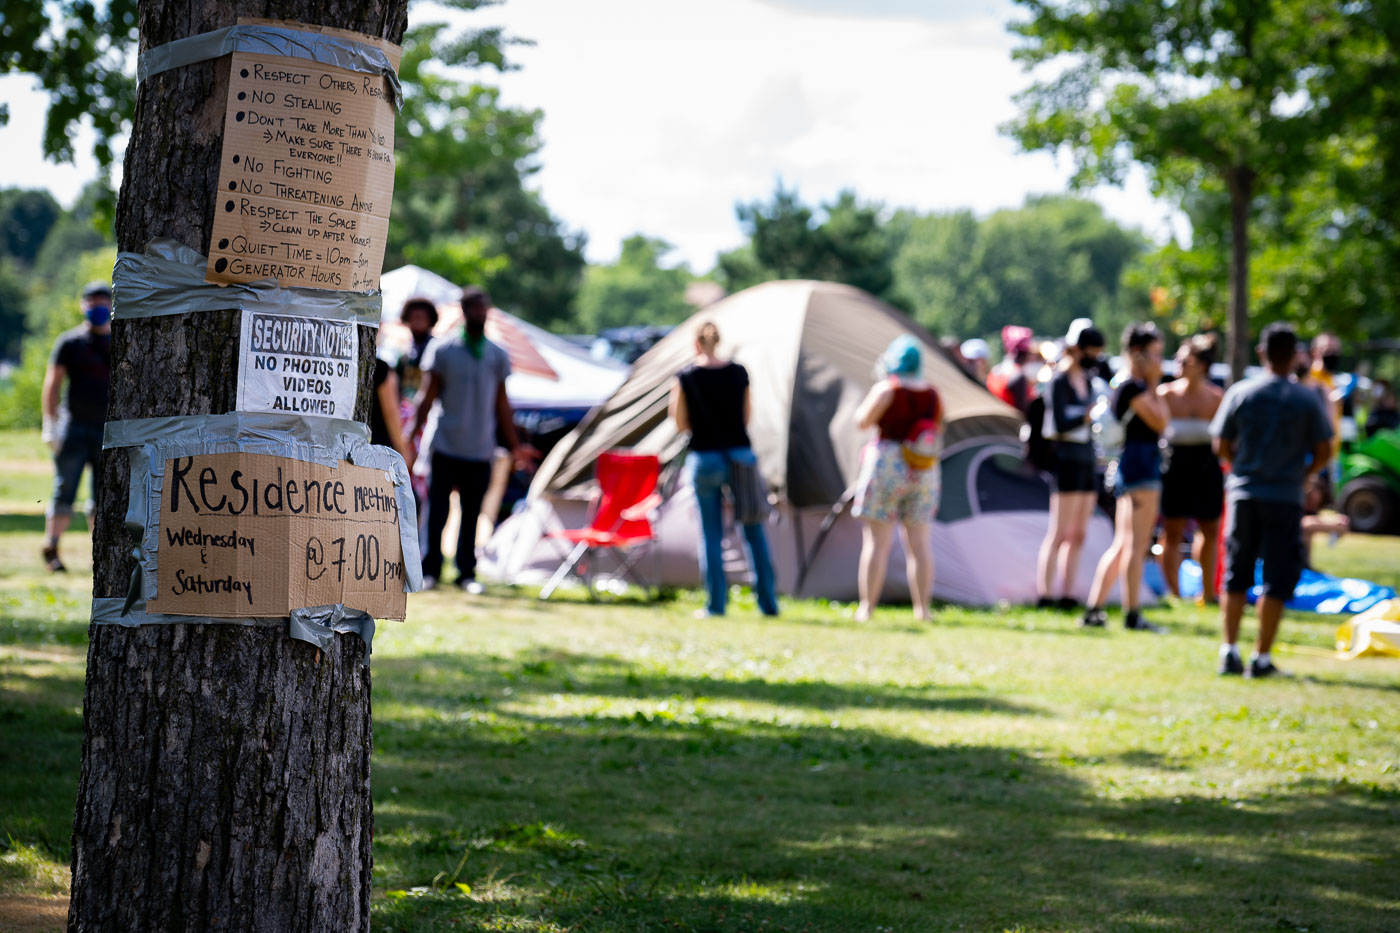 Encampment rules at Powderhorn park